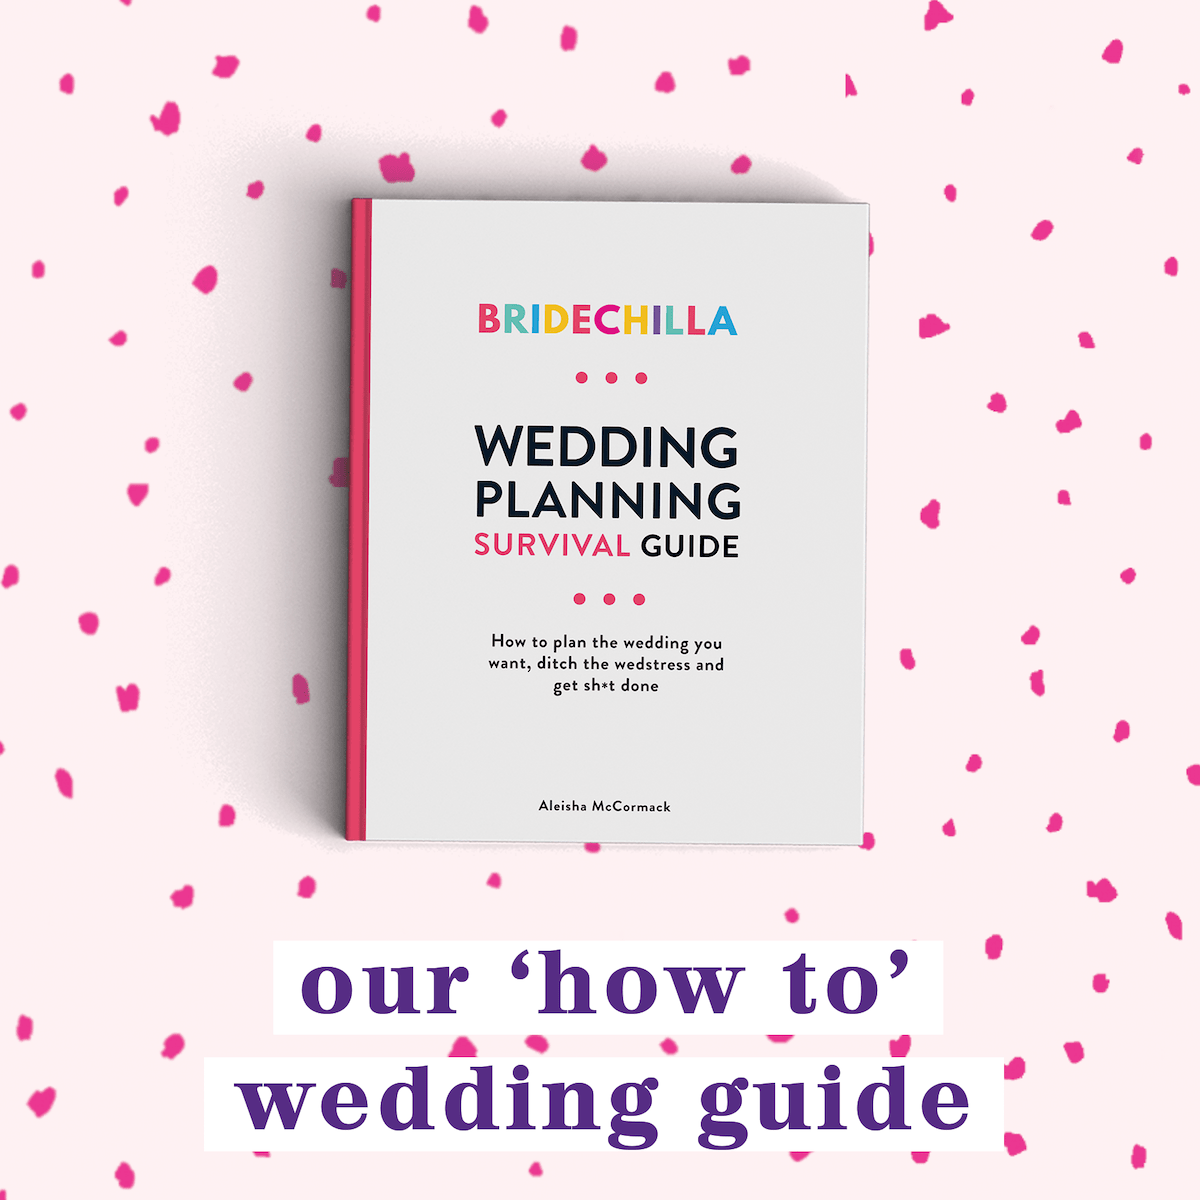 Bridechilla Survival Guide wedding planning